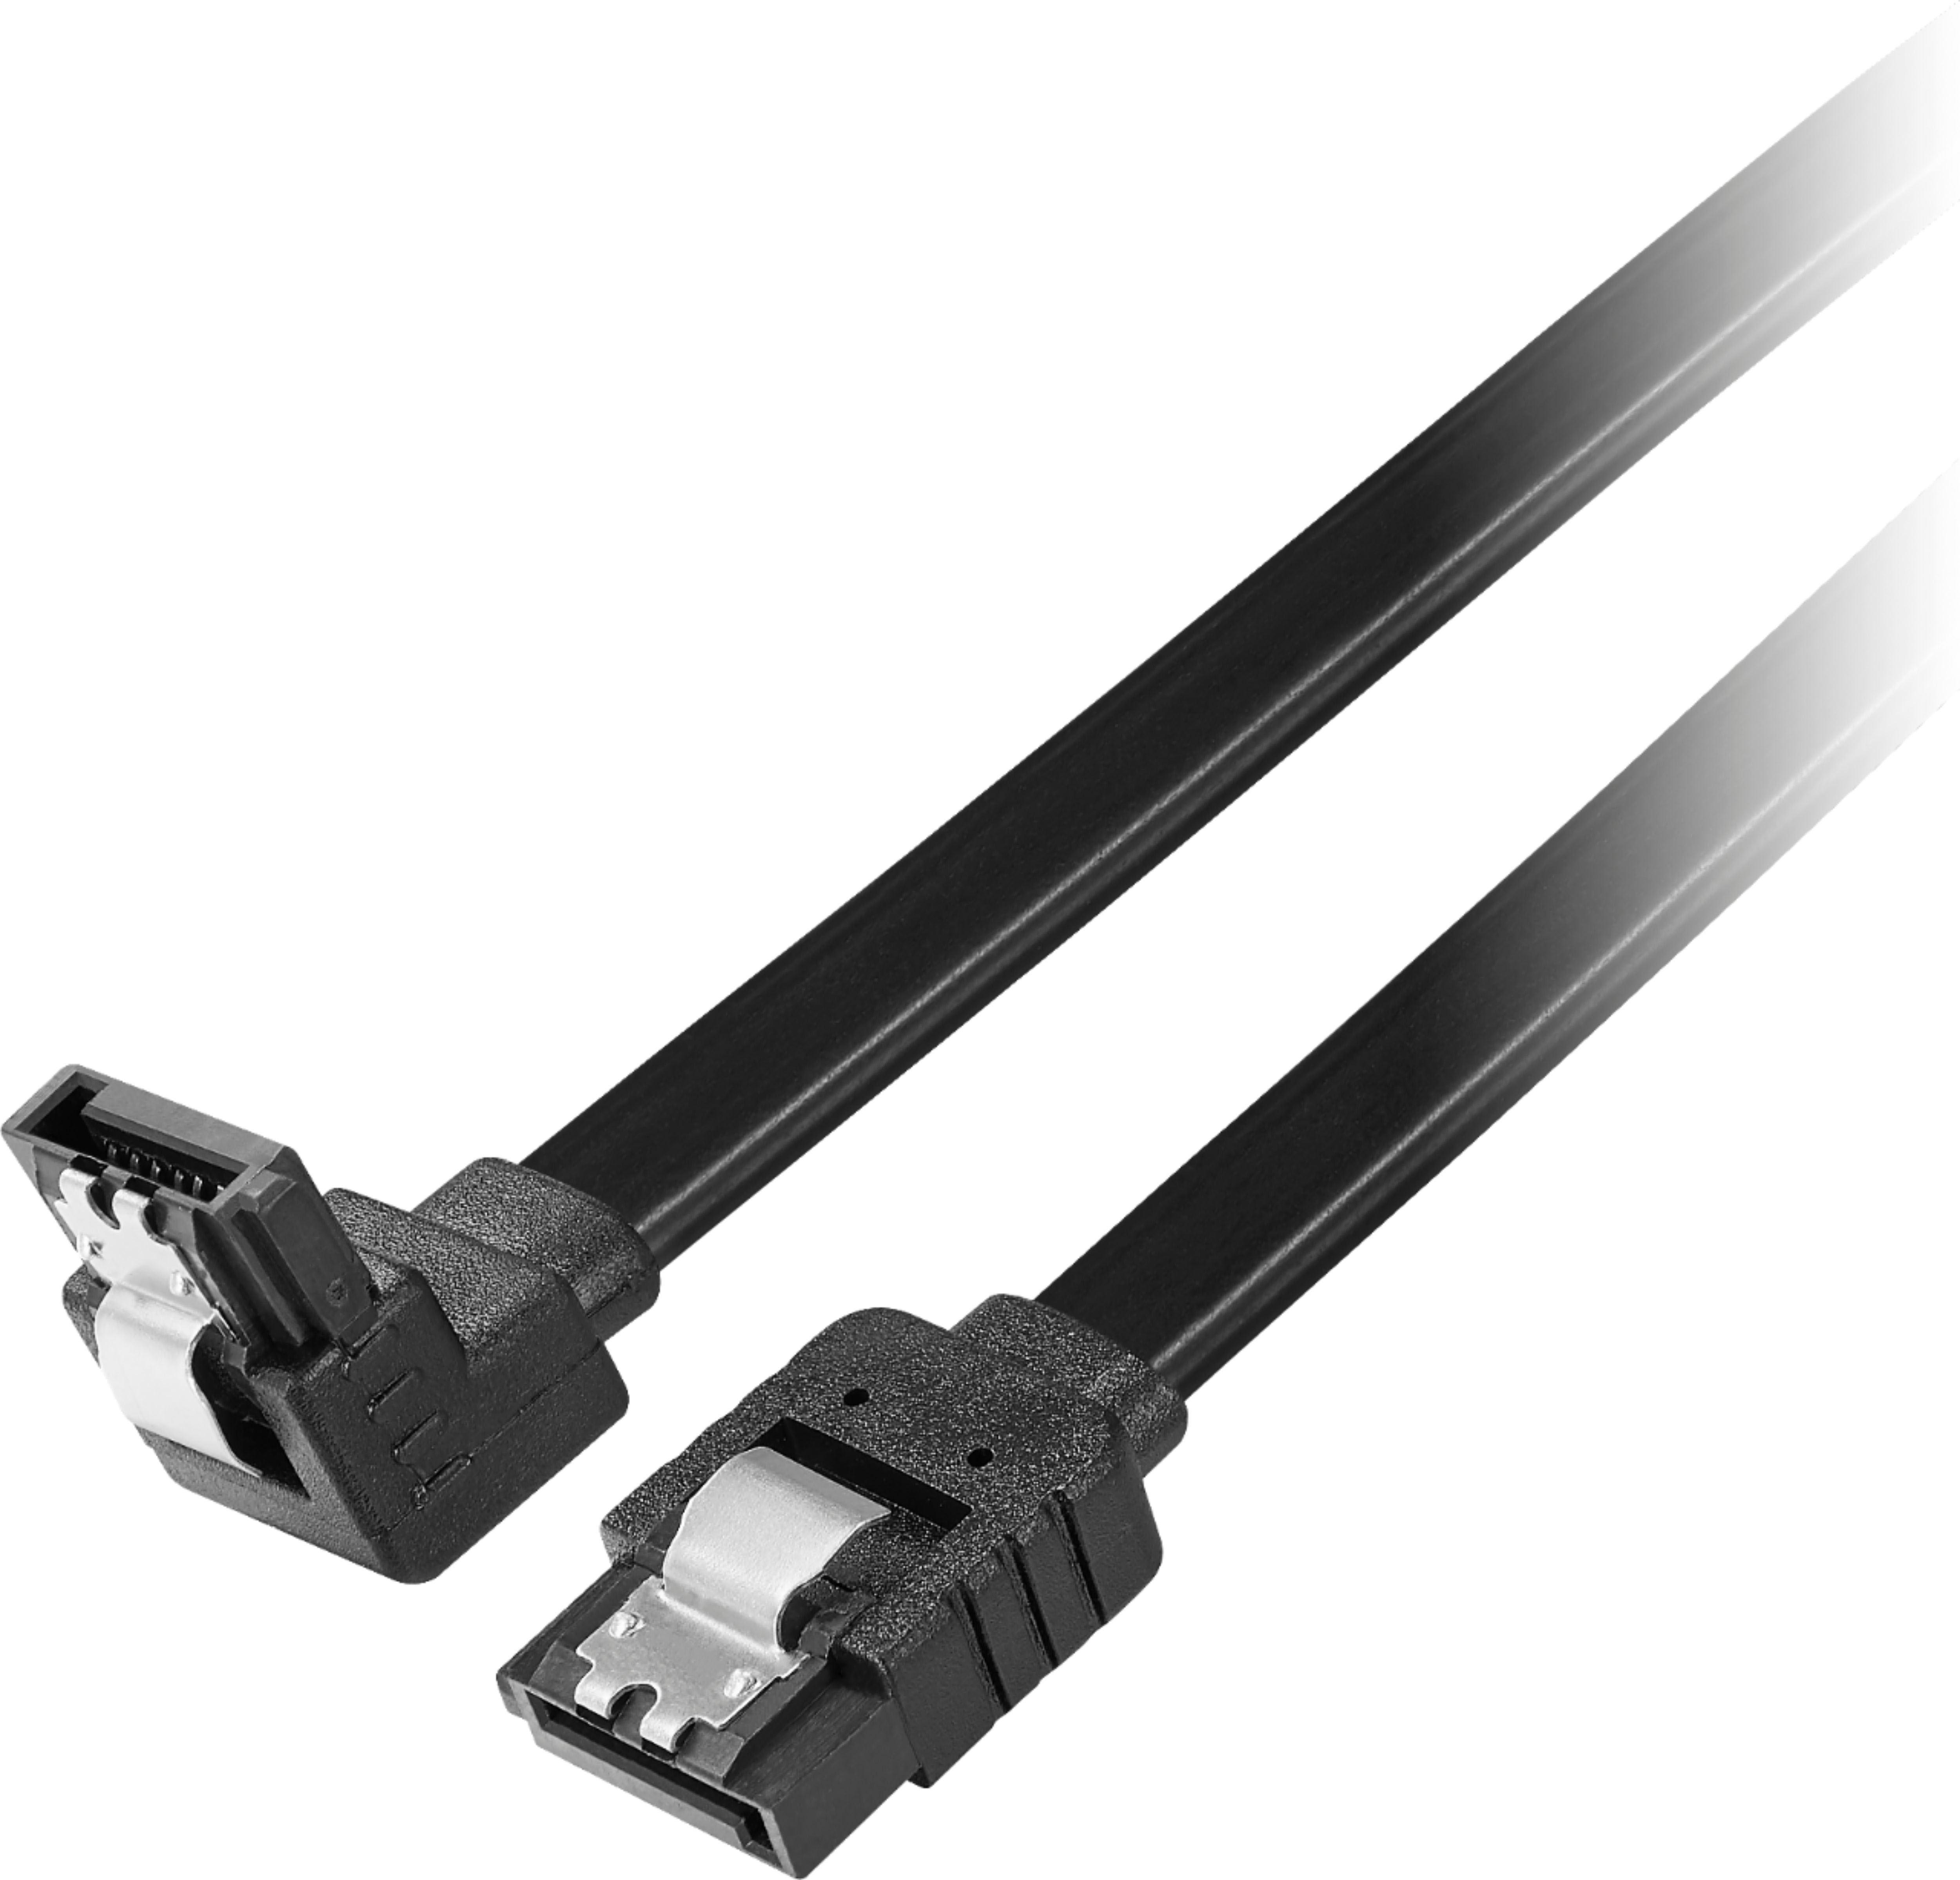 USB 3.0 SATA III Hard Drive Adapter Cable, SATA to USB Adapter Cable f –